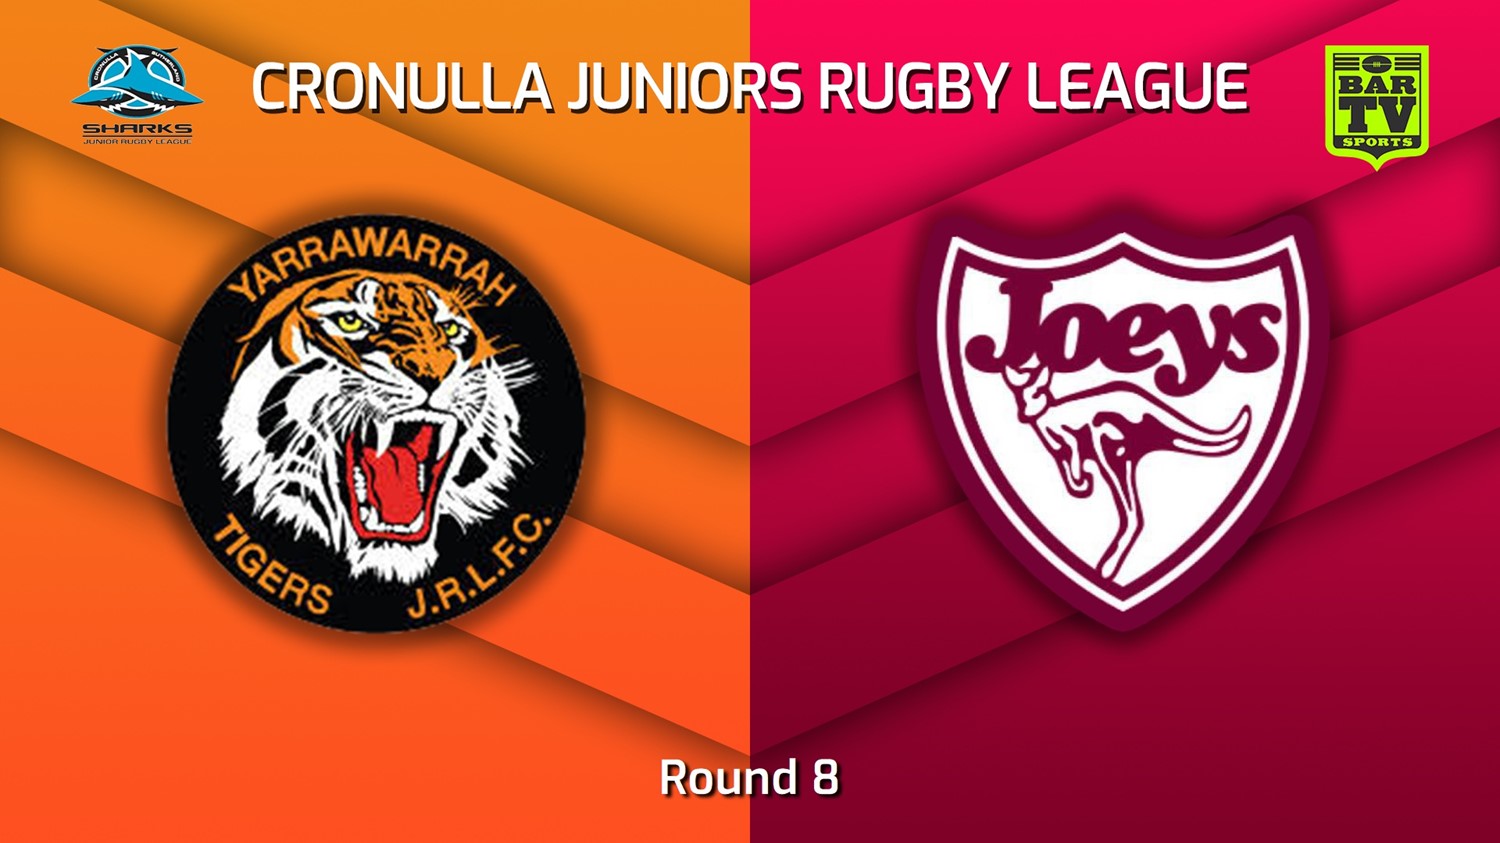 220625-Cronulla Juniors - U6 Yellow Round 8 - Yarrawarrah Tigers v St Josephs Slate Image